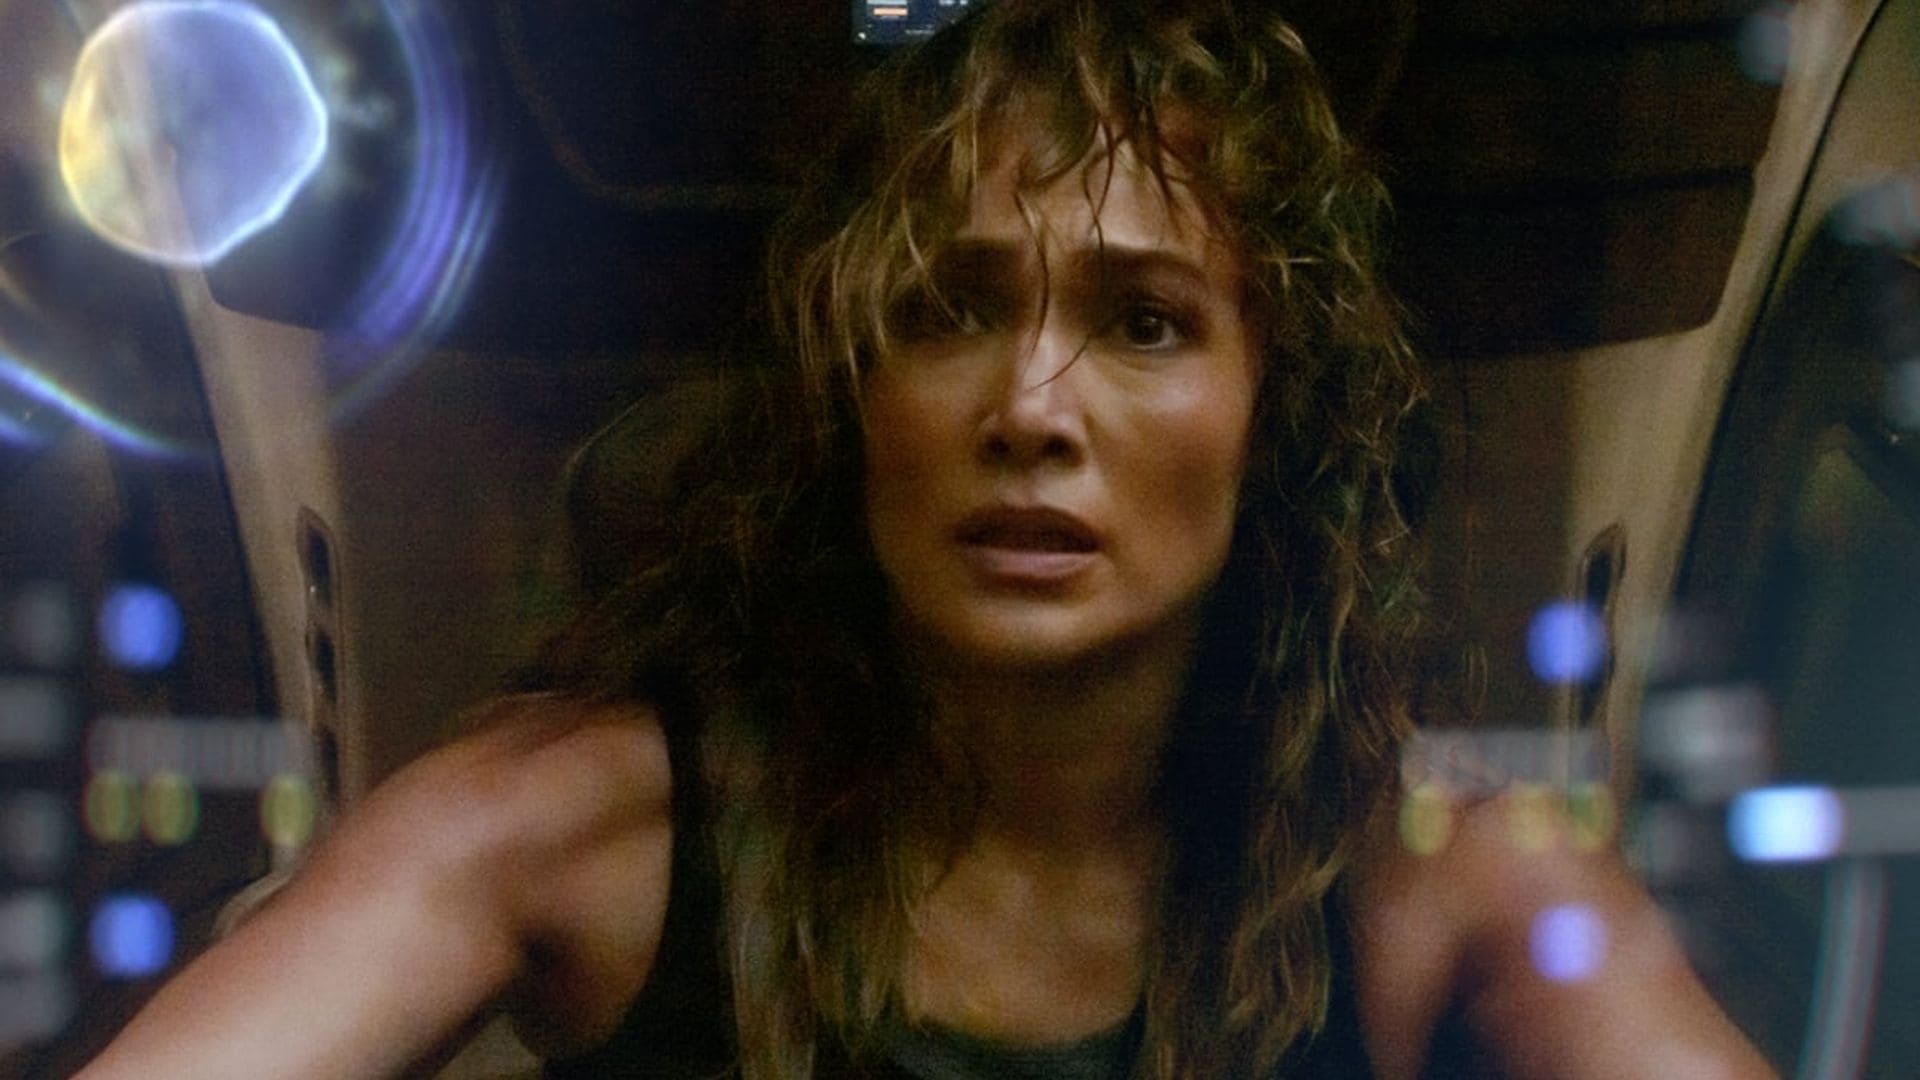 Watch Jennifer Lopez defend humanity in sci-fi movie trailer